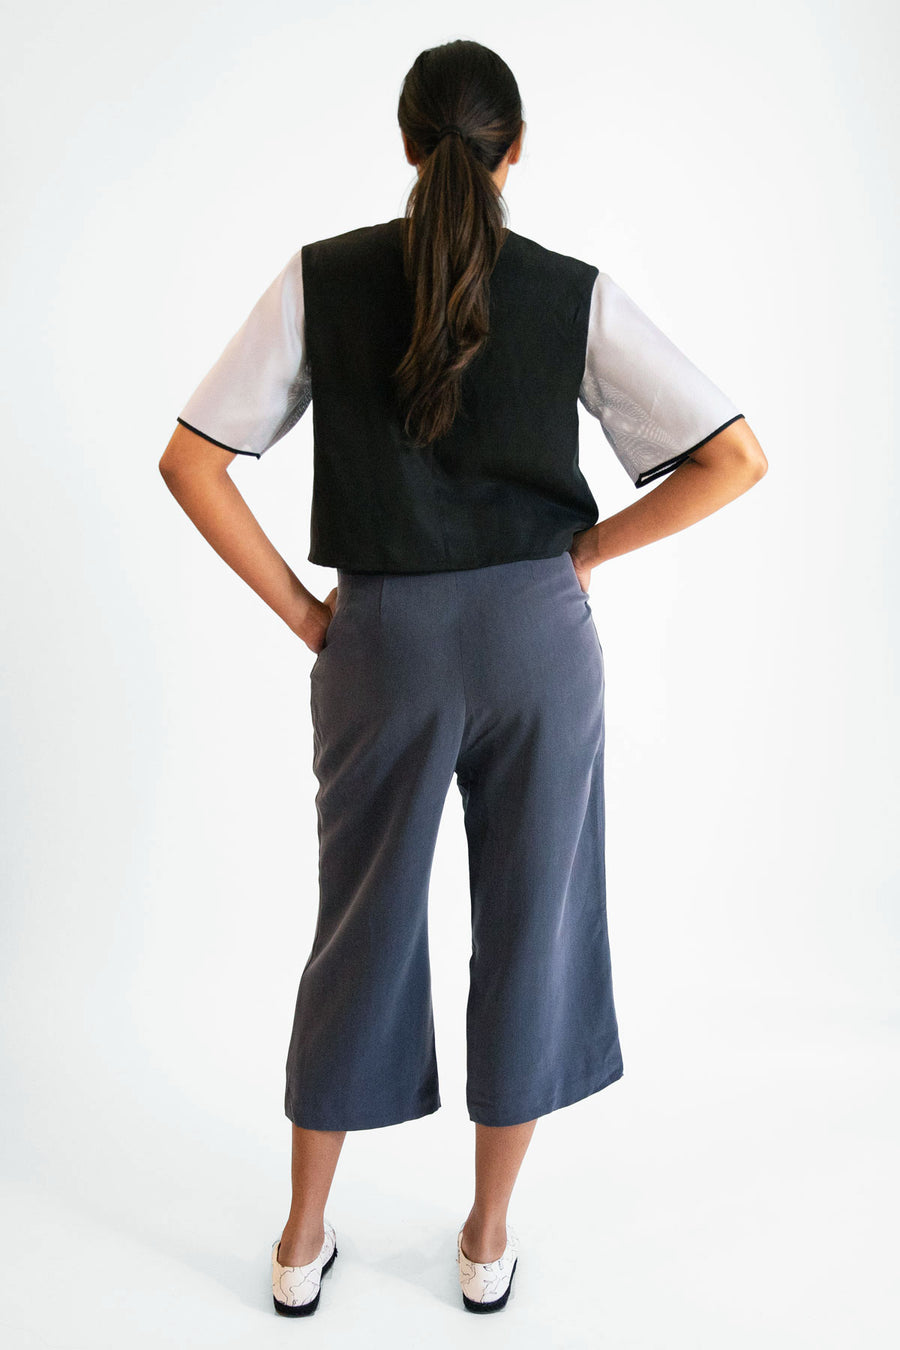 Tailored Culottes - Slate Gray (US 4, 6, 10)